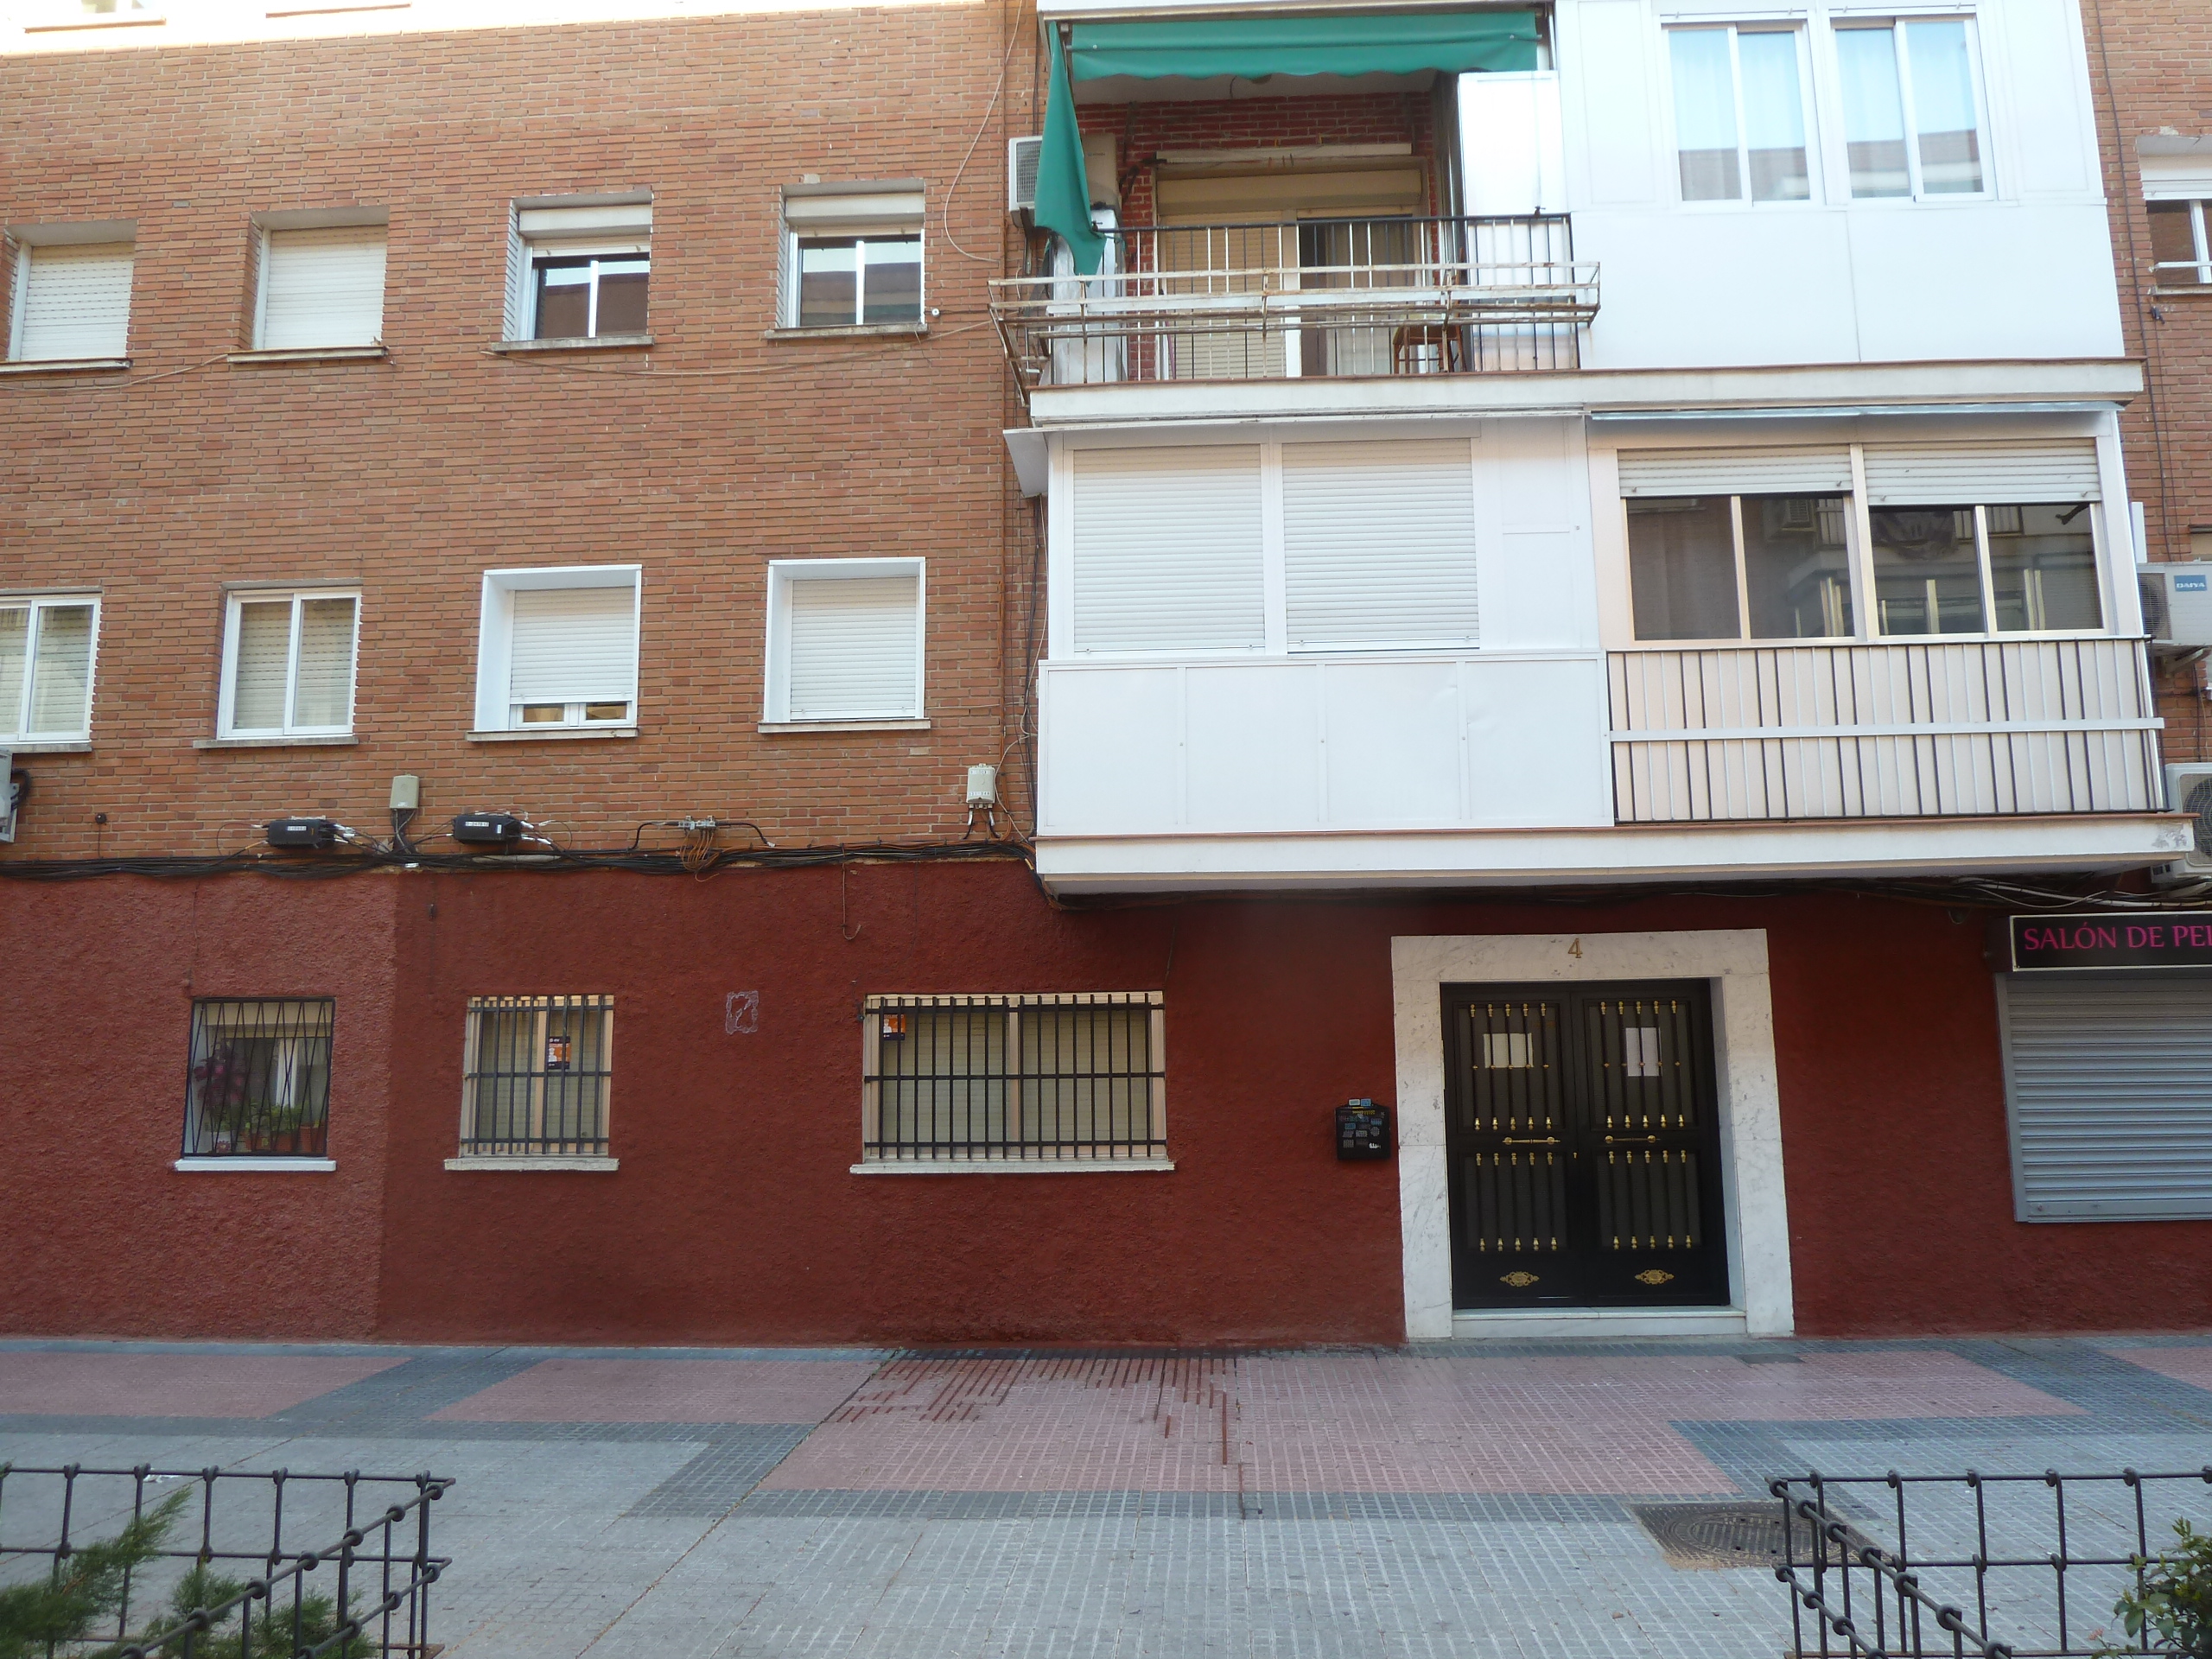 Cambio de uso de local a viviendas en la C/Mallorca 4 Leganés